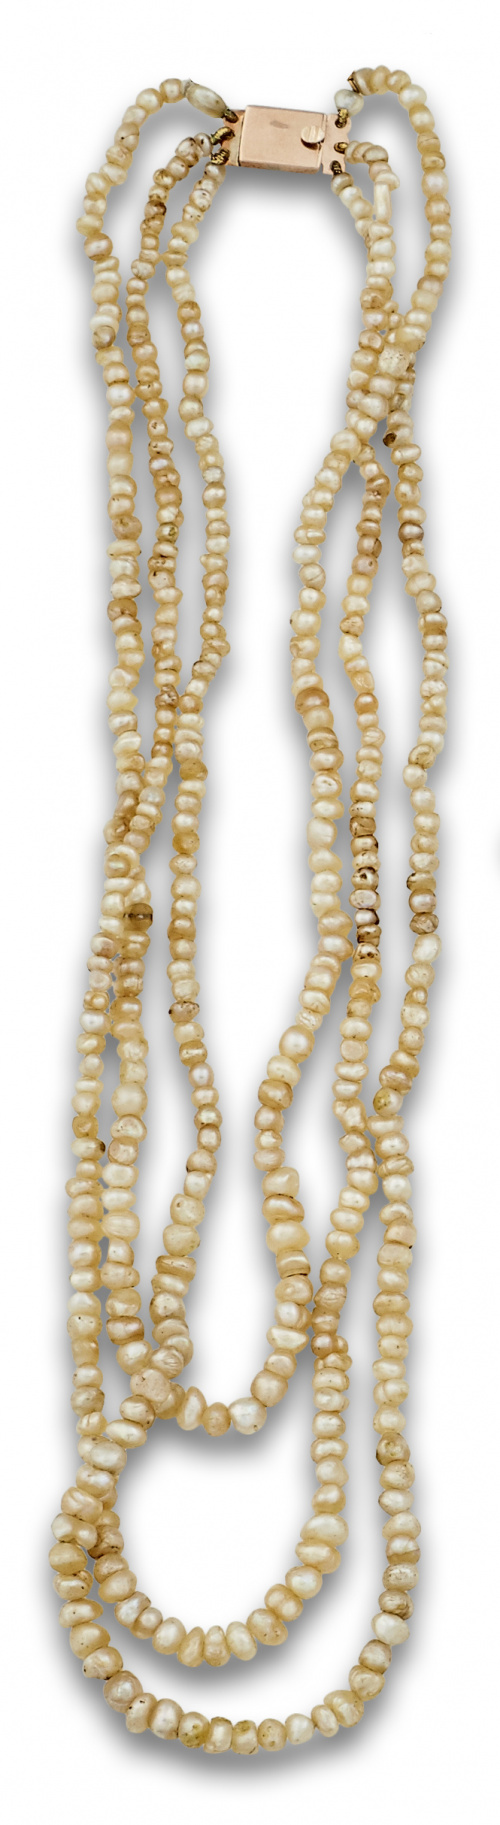 Collar de tres hilos de aljófar de perlas s.XIX con cierre 